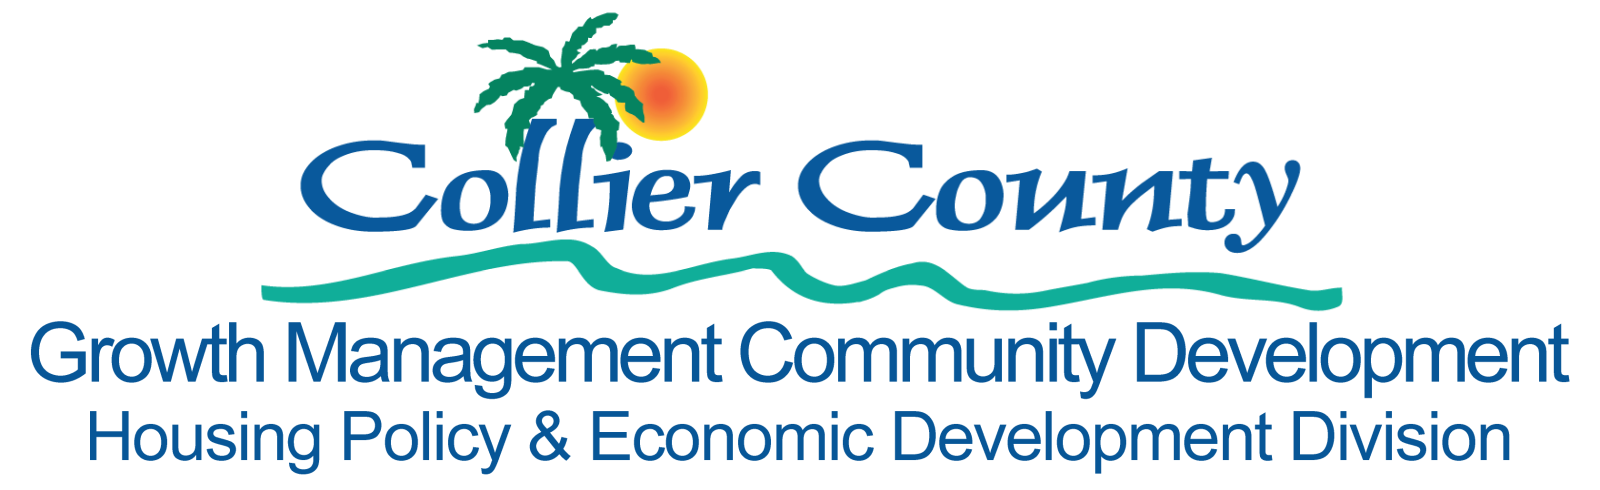 Housing Policy Economic Developement logo